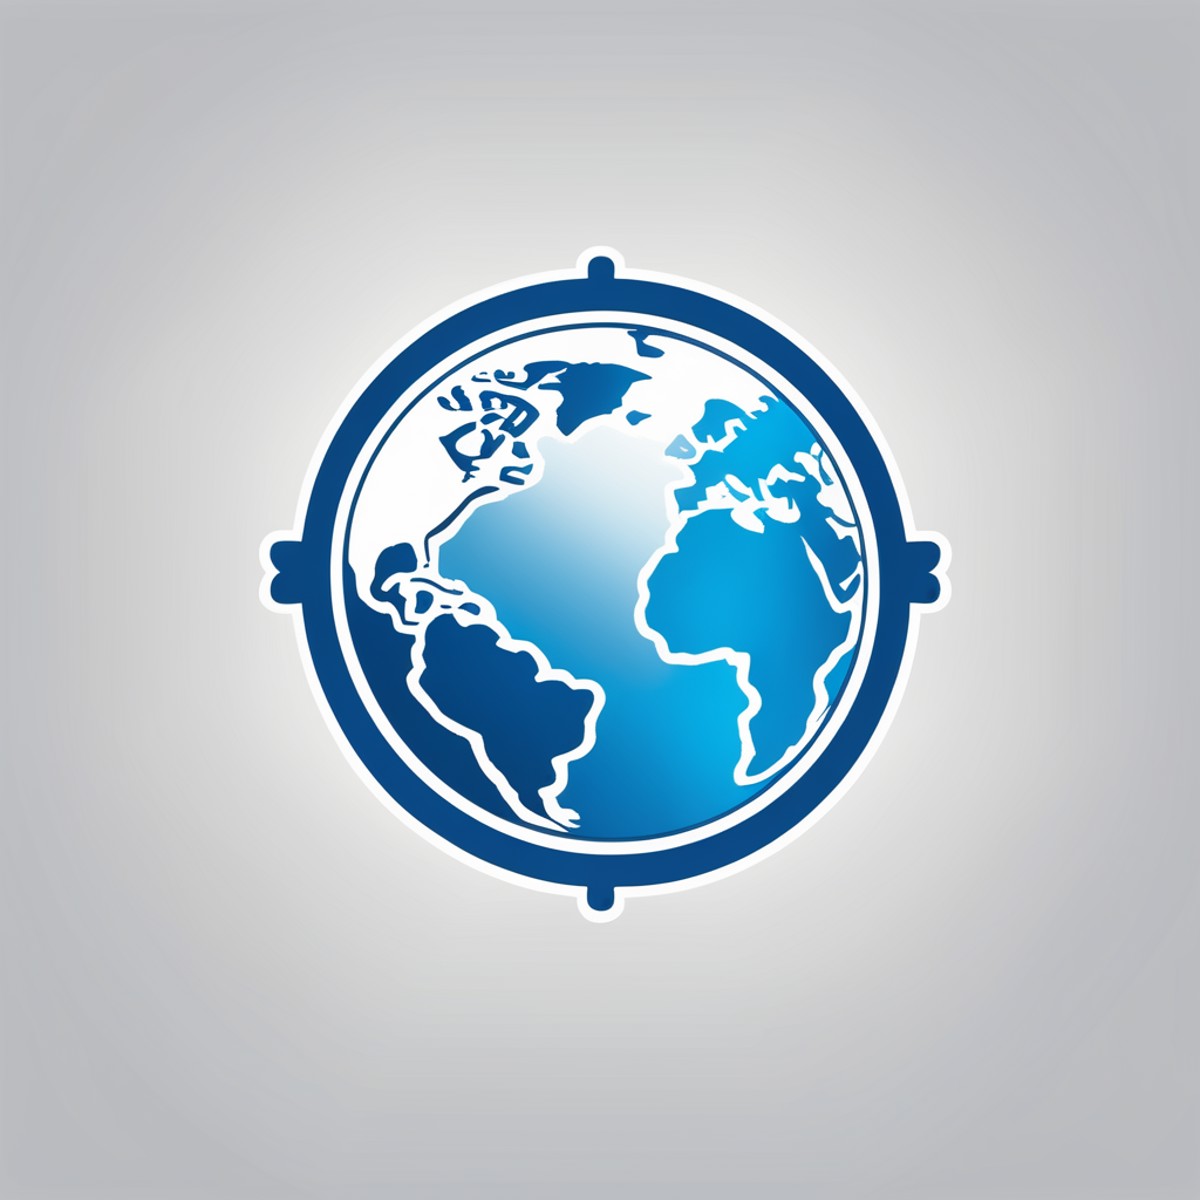 A logo for a travel agency, a blue world globe, no lands, one color, shades of blue and green, LogoRedAF, <lora:LogoRedmon...